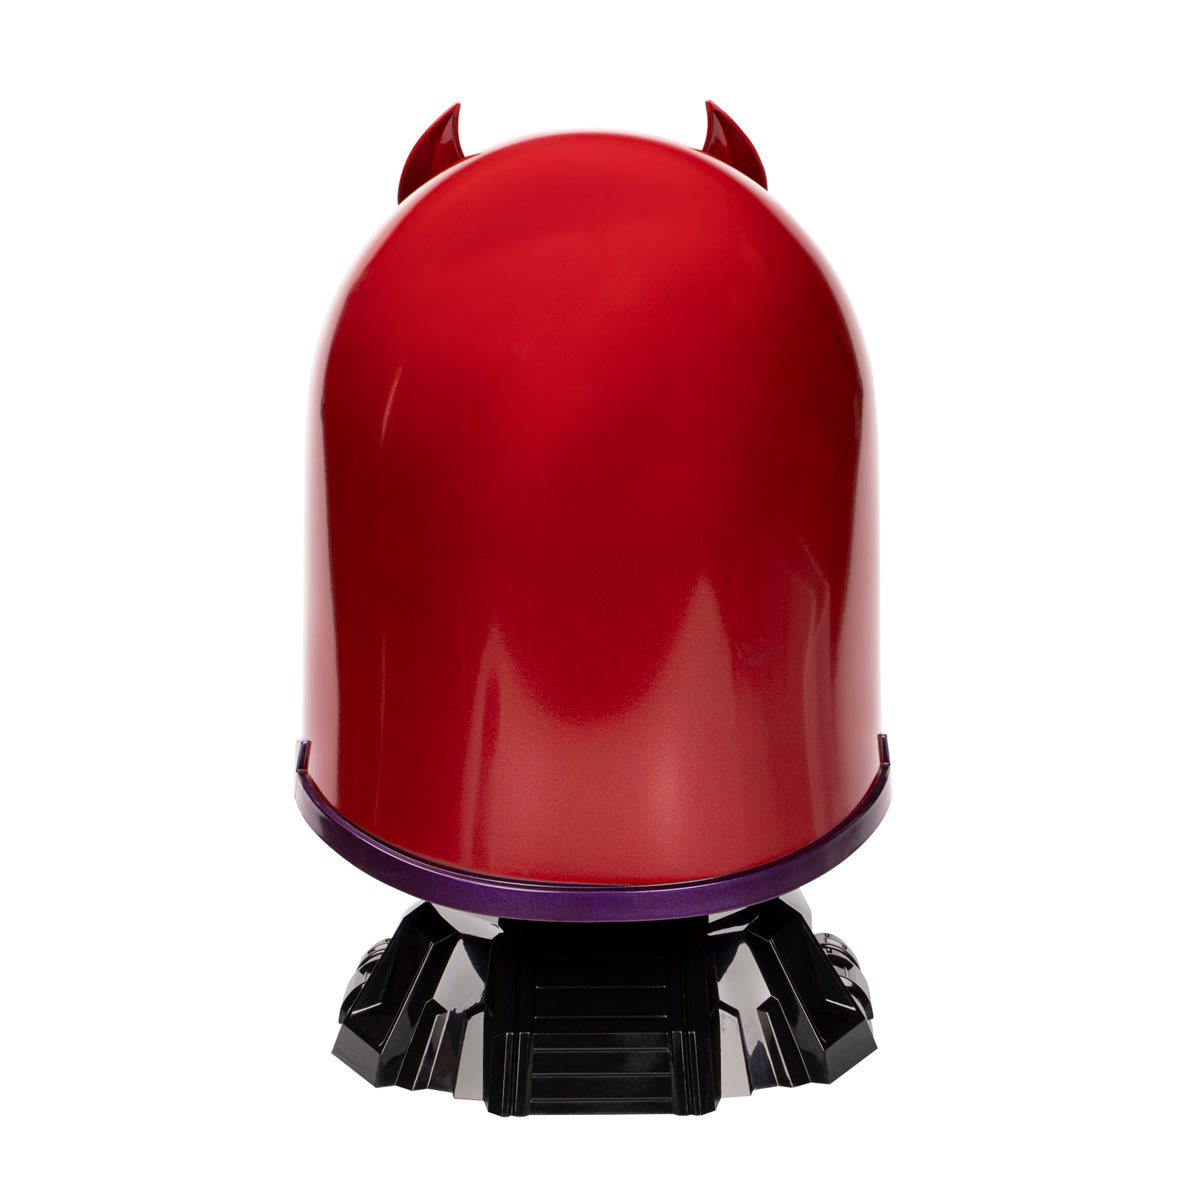 X-Men ‘97 Marvel Legends Magneto Premium Roleplay Helmet Prop Replica back view - Heretoserveyou